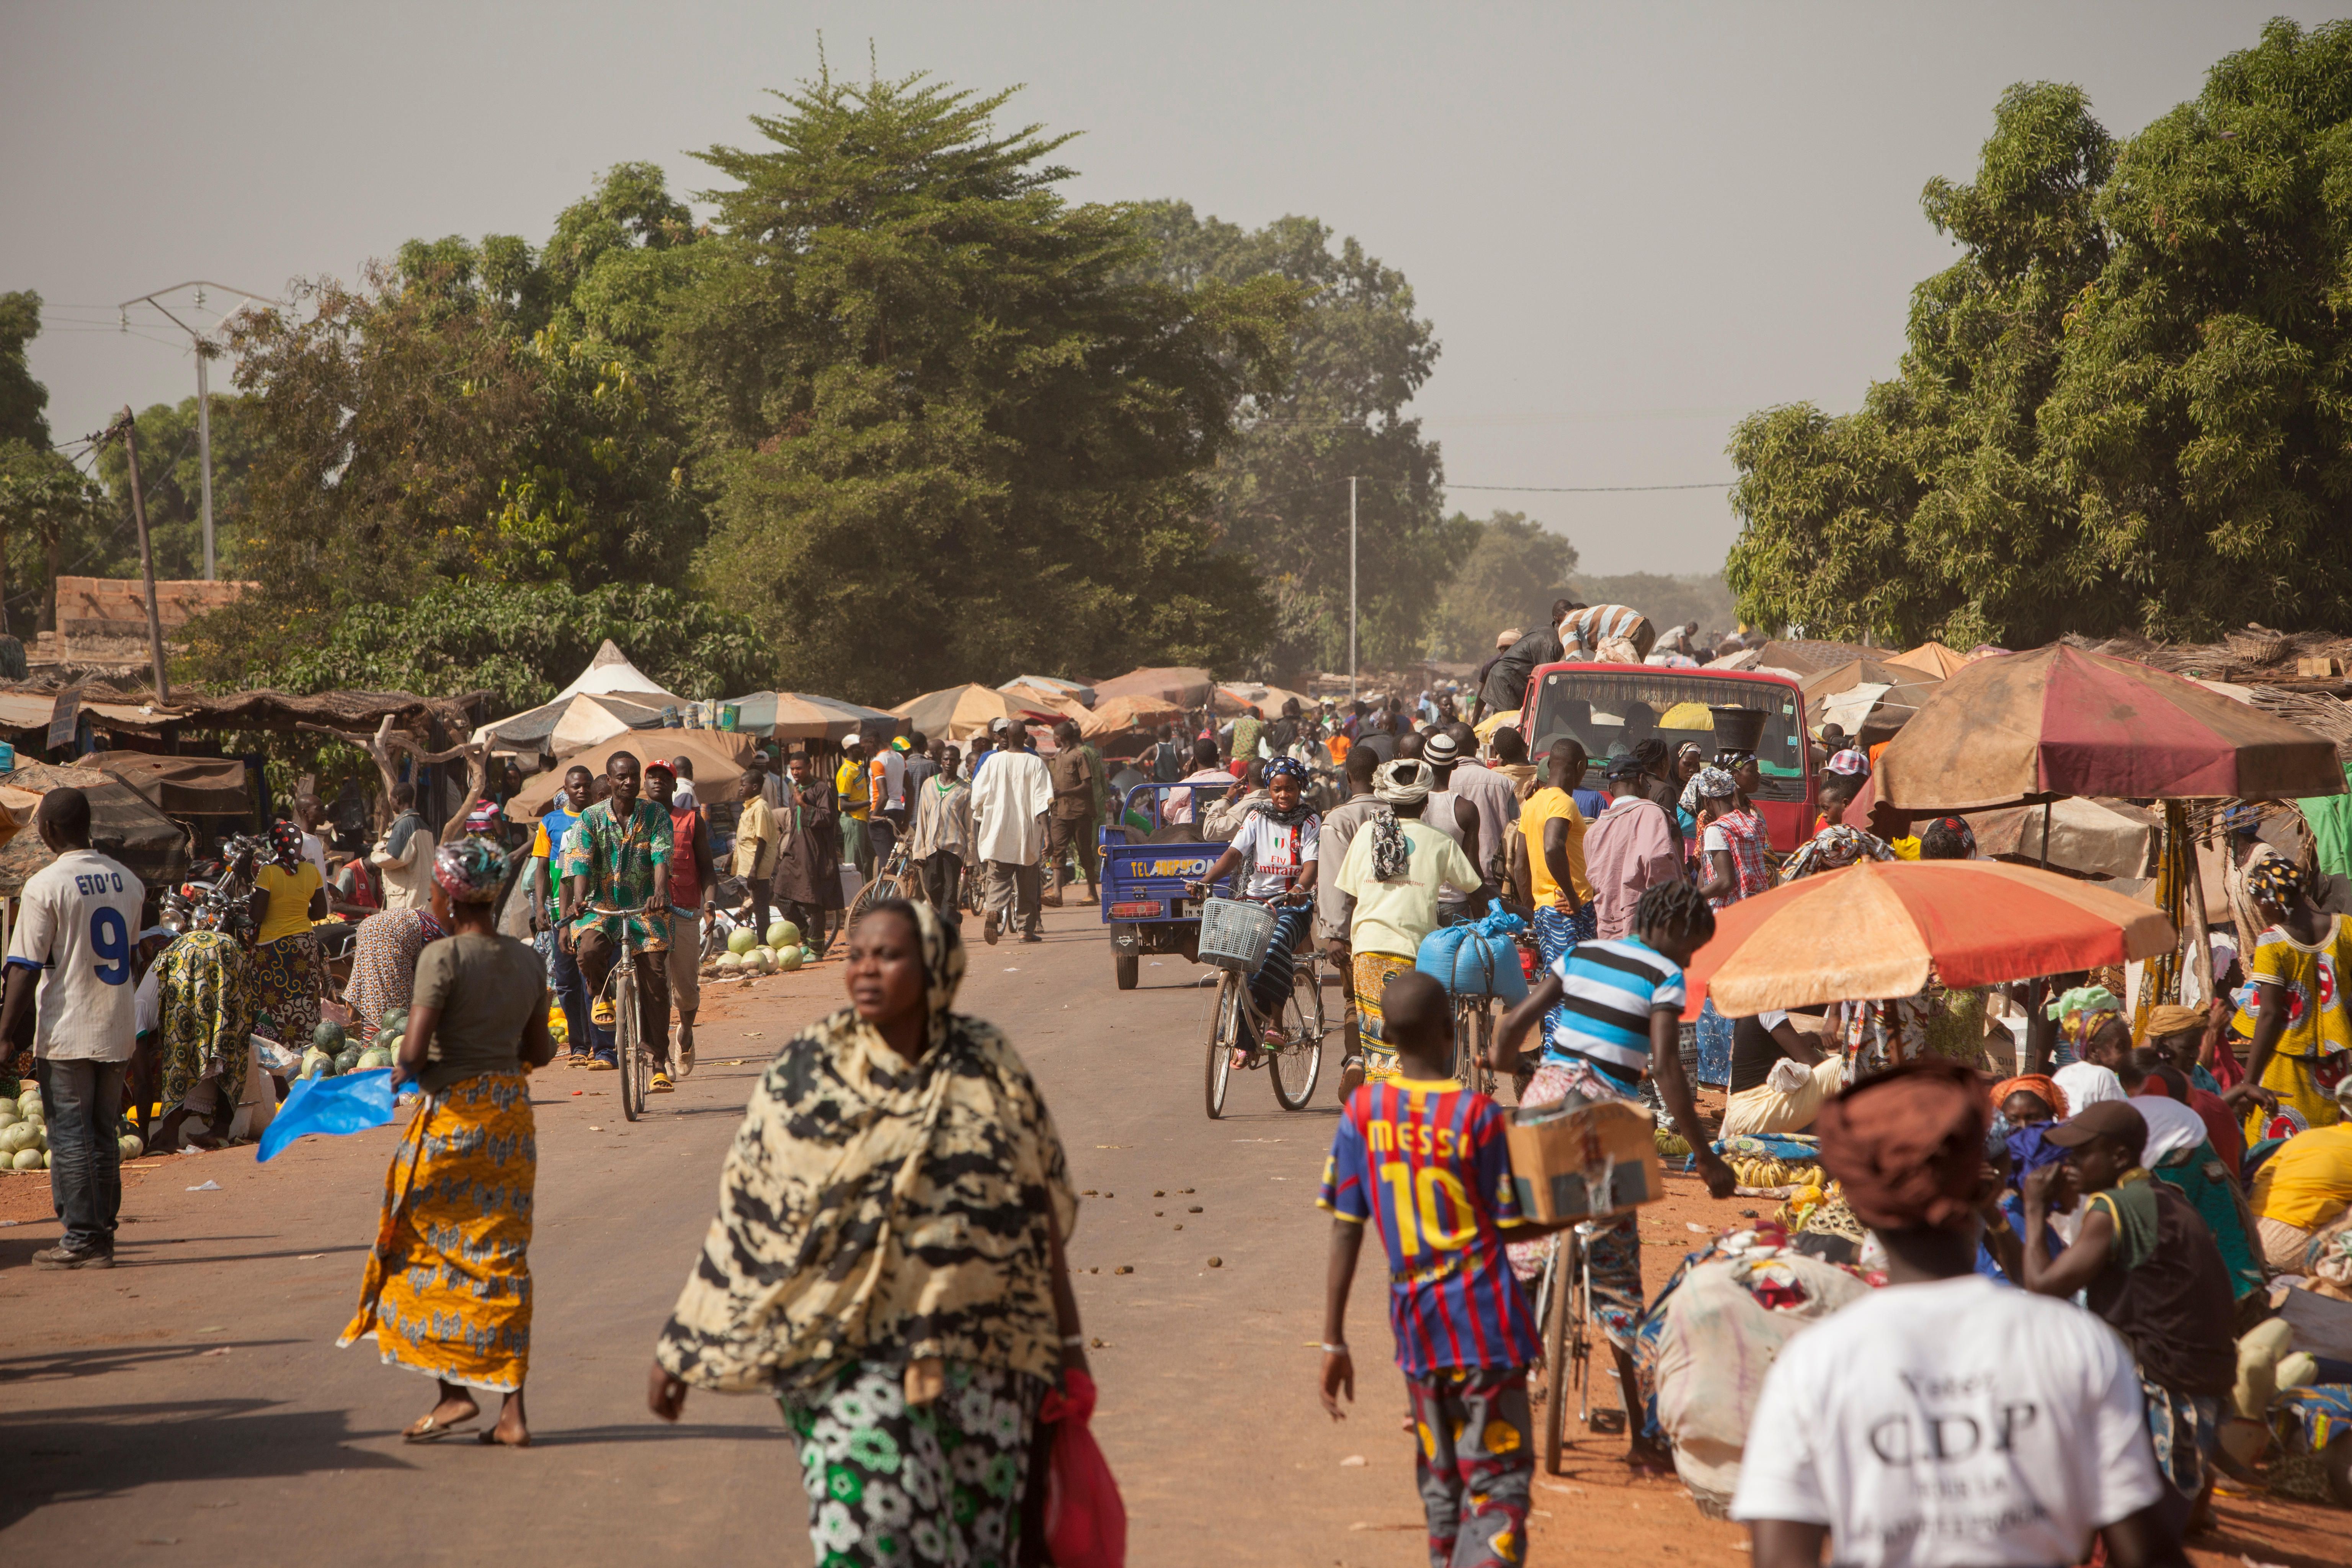 Believers defying jihadists in Burkina Faso says local church leader